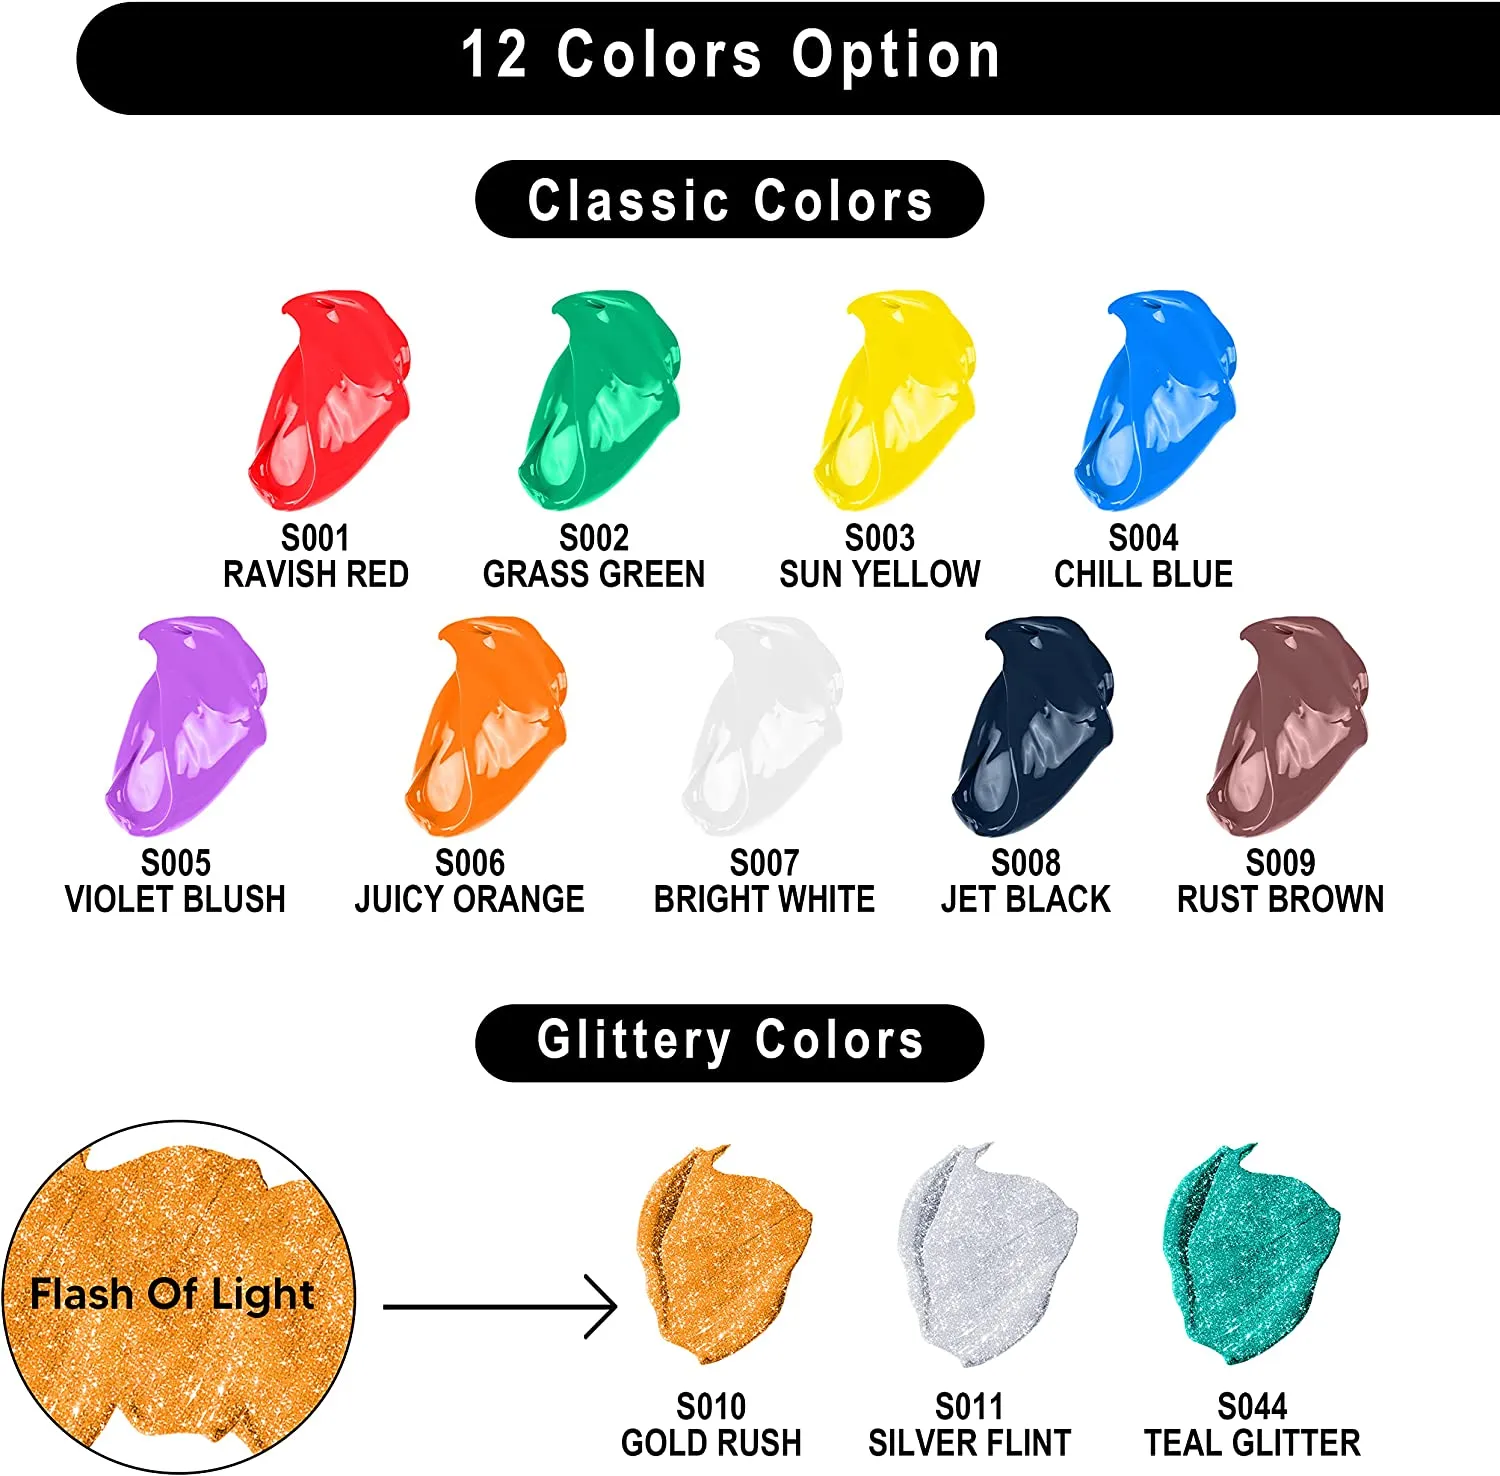 Colorations Washable Kids Glitter Paint Set - 4 oz (Pack of 6